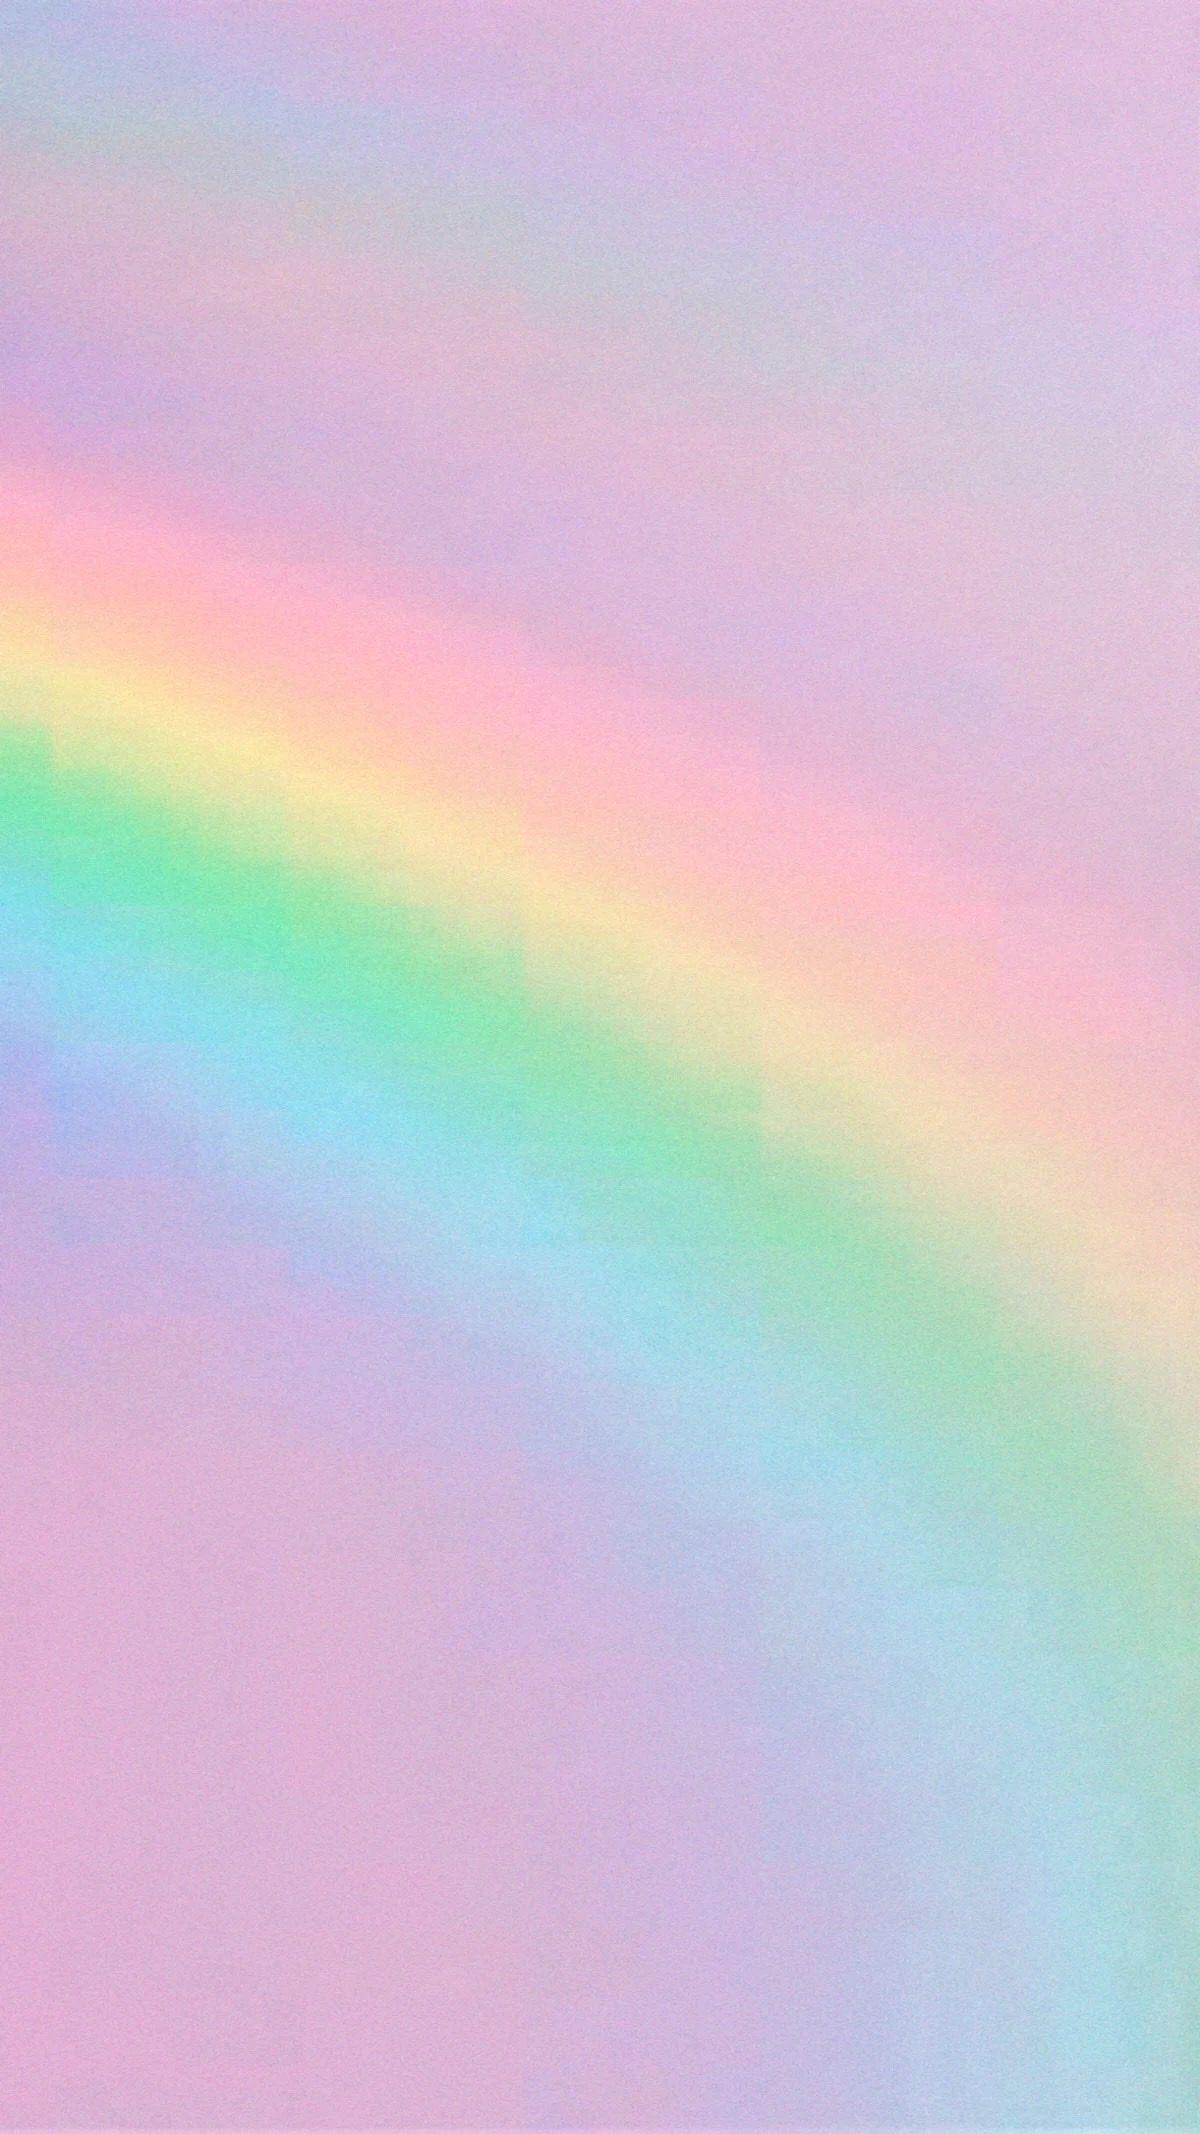 Rainbow. Background. iPhone wallpaper, Wallpaper, Rainbow wallpaper